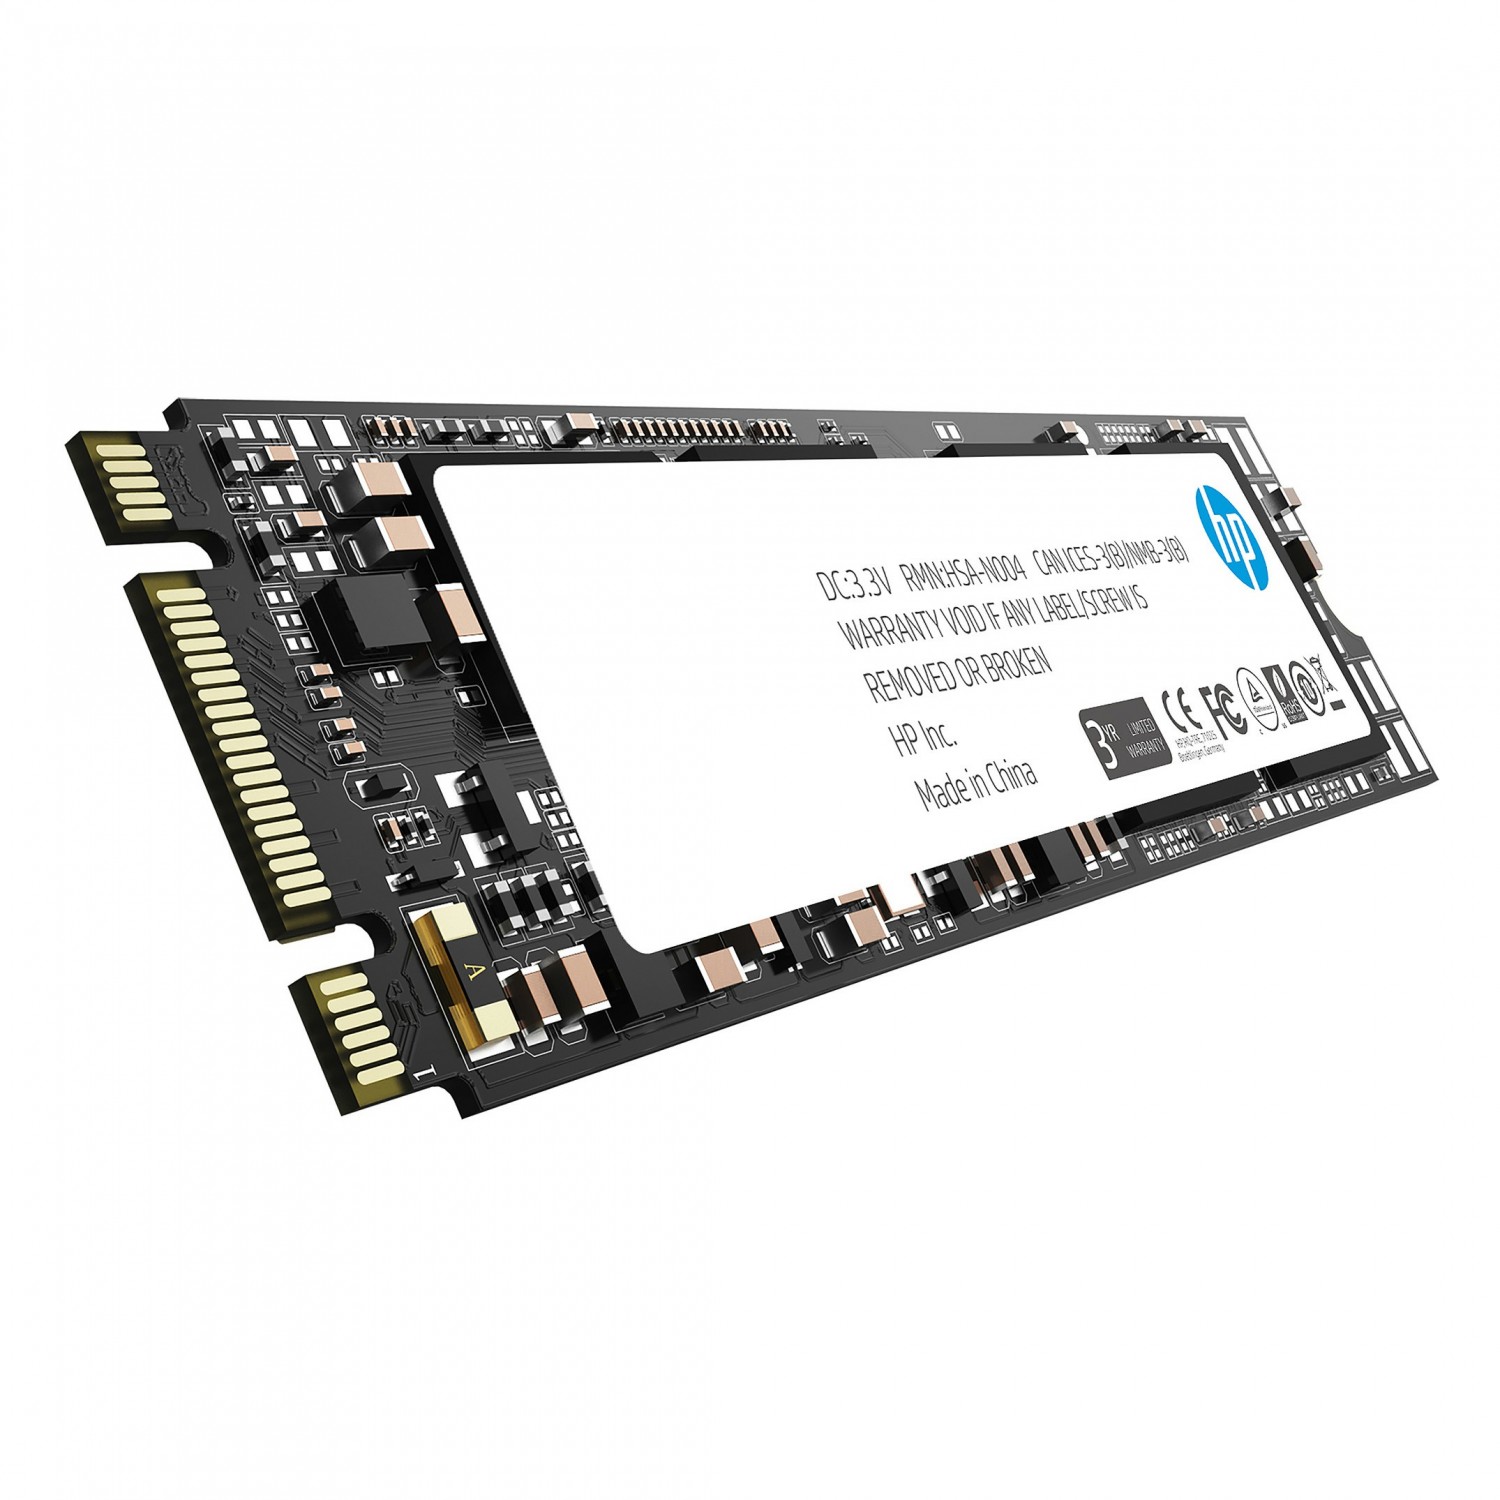 حافظه اس اس دی HP S700 M.2 120GB-1